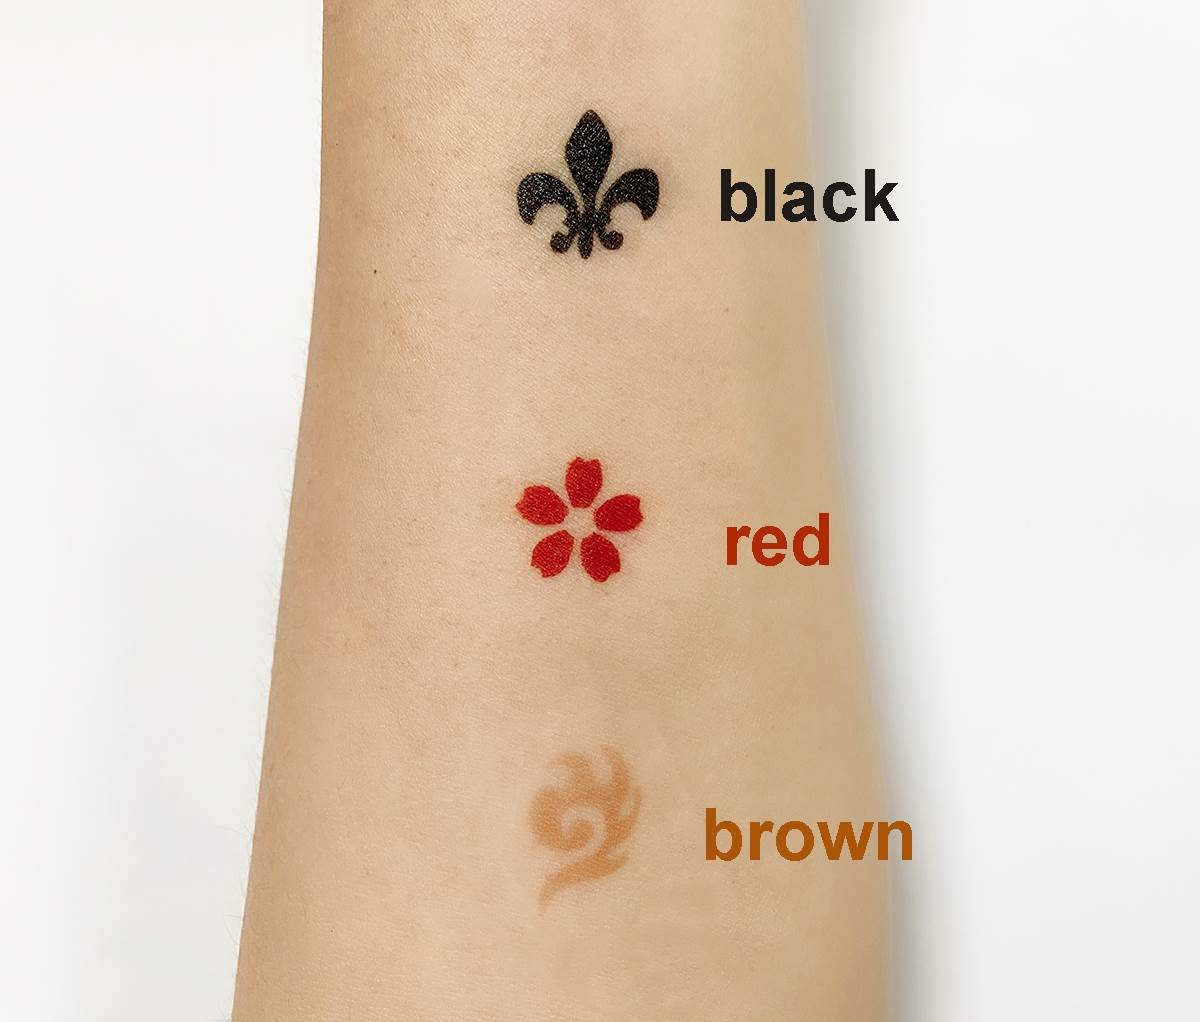 Charmark Jagua Gel Temporary Tattoo Kit for Women Men Kids, Semi Permanent Tattoo Ink Summer Trend Art Painting DIY Fake Freckles 84 Pcs Tattoo Stencils - Full Kit 3 Colors (Black+Red+Brown)